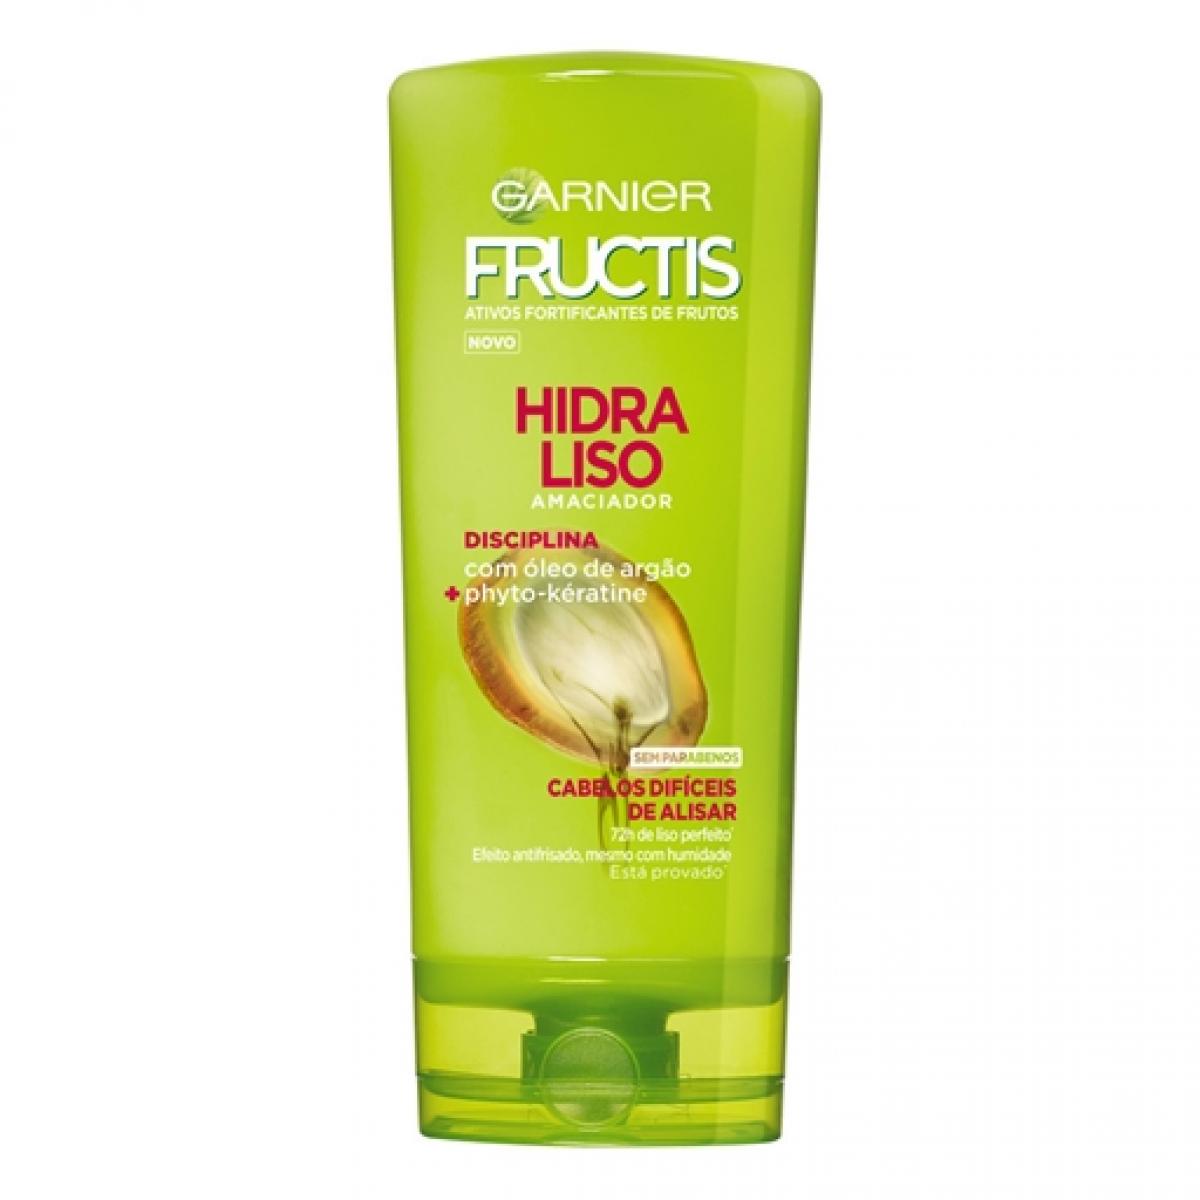 nuevo fructis hidra liso